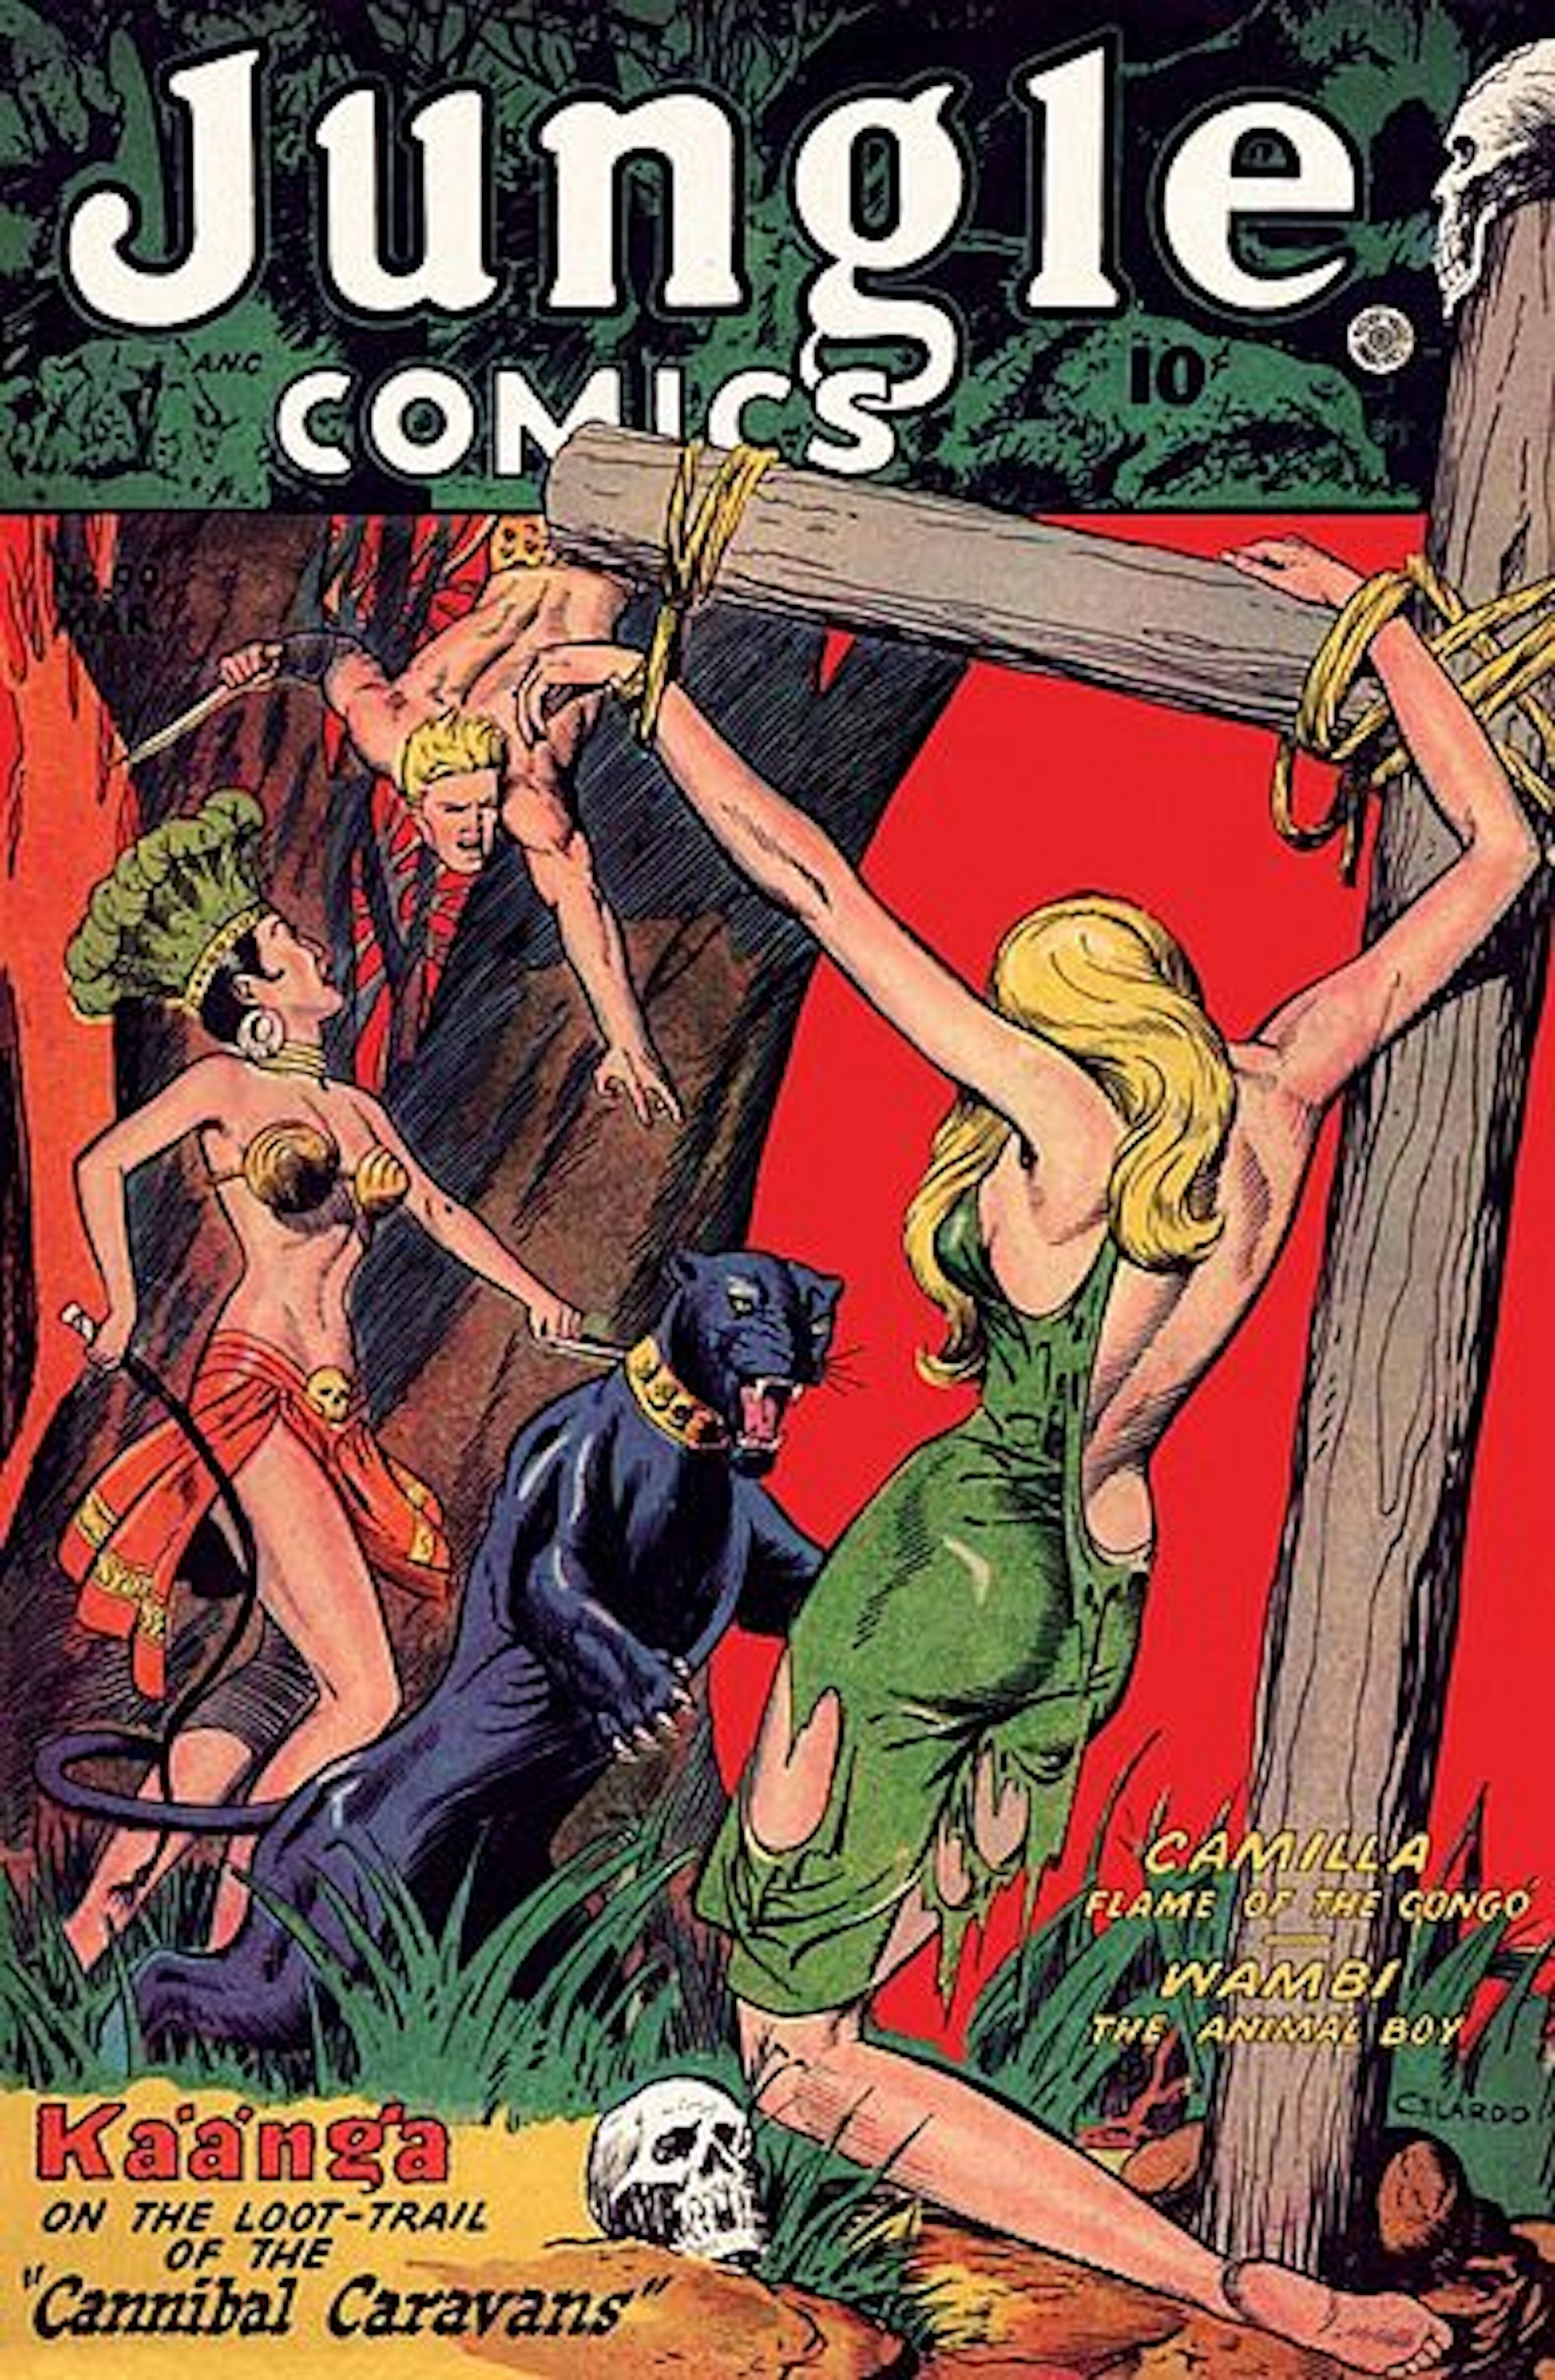 Jungle Comics #99, 1948. (Copyright expired.)